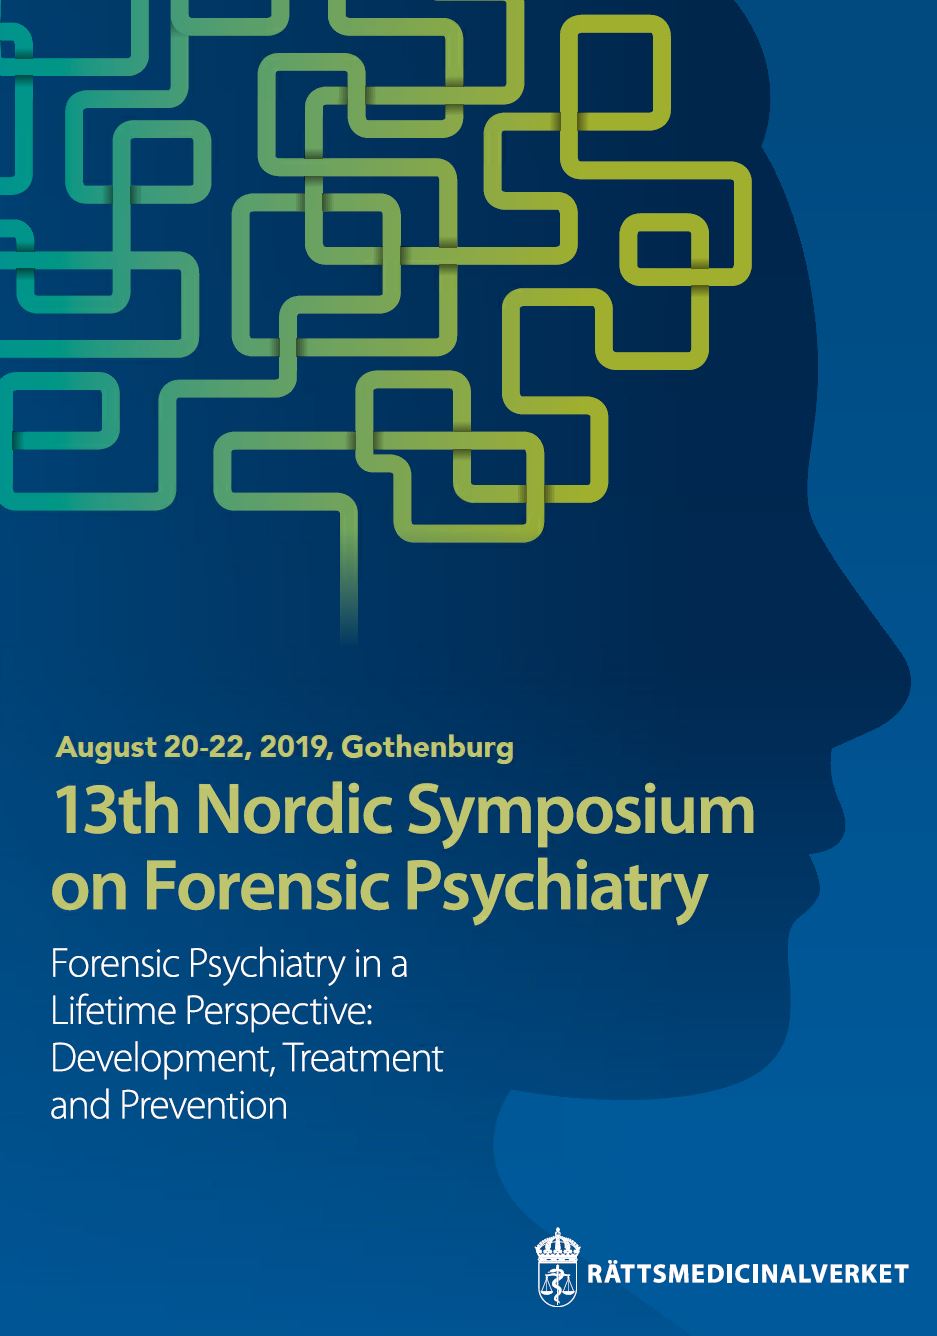 13th Symposium on Forensic Psychiatry